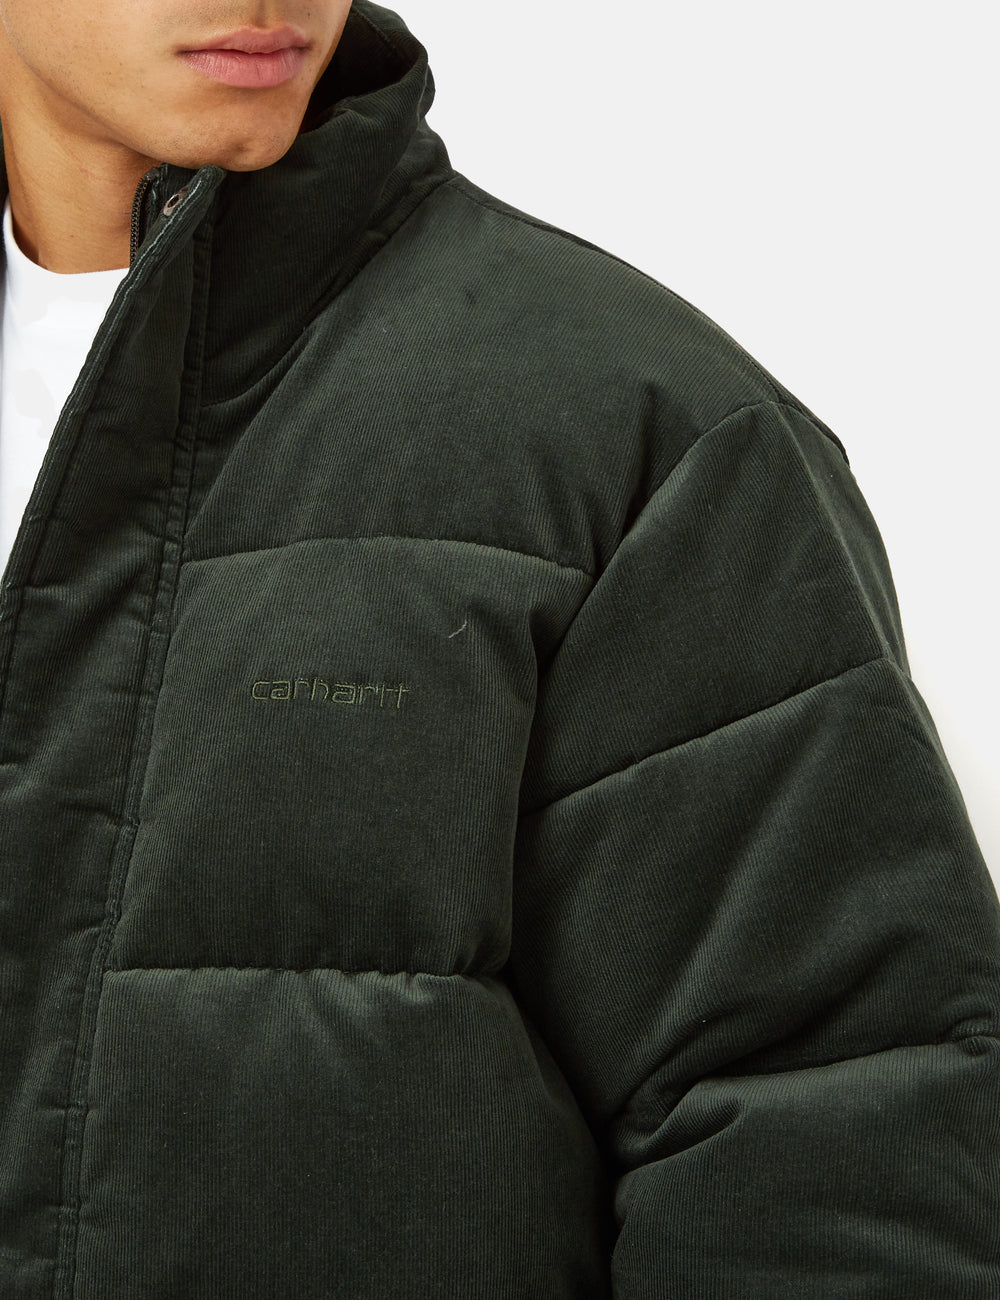 Esprit Quilted Body Jacket In Navy, $37, Asos